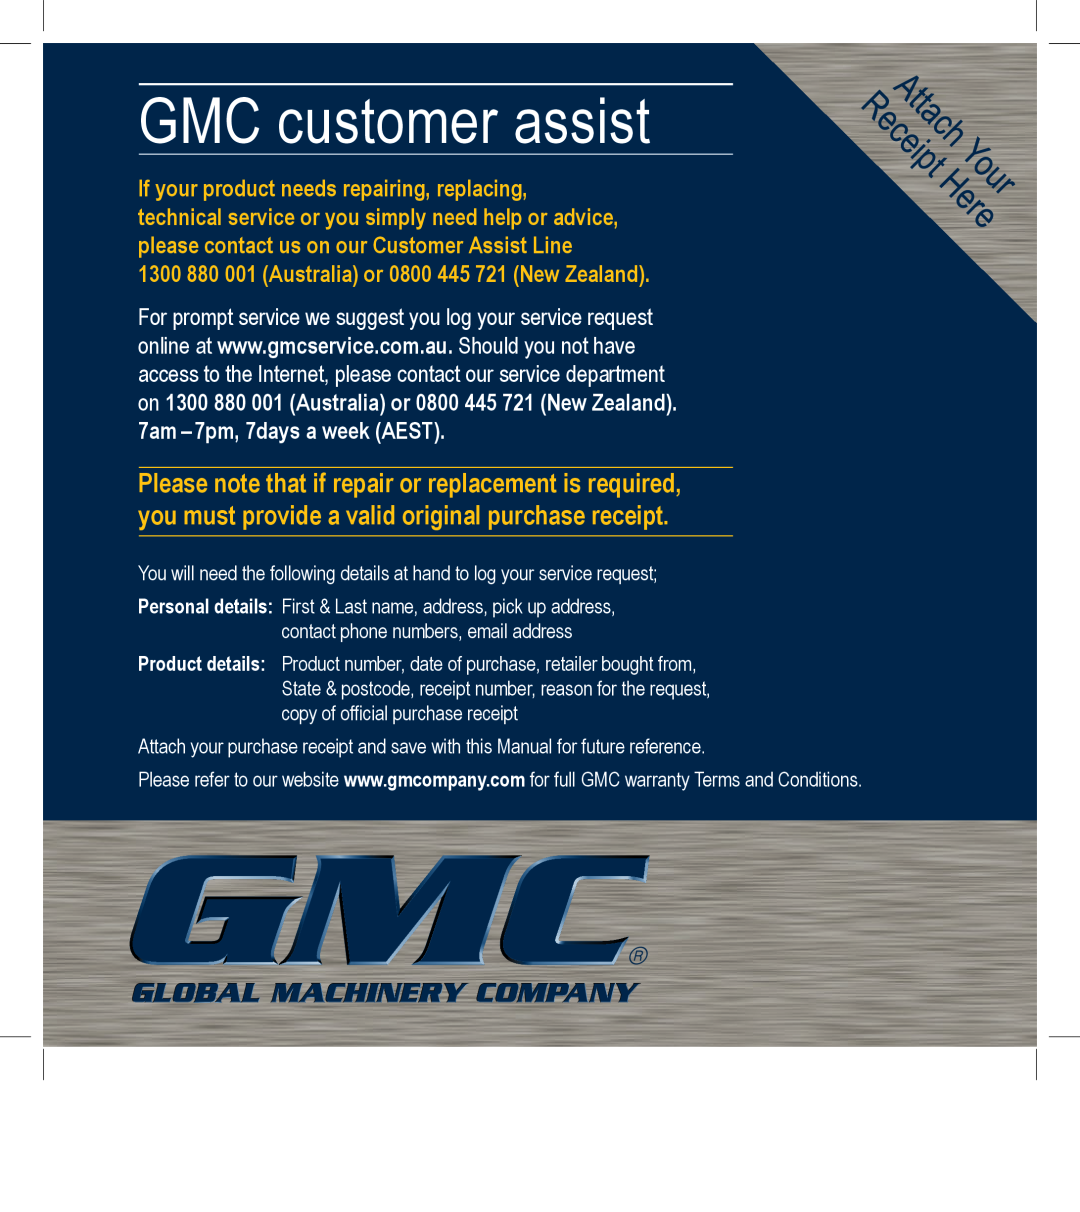 Global Machinery Company BLV8000A GMC customer assist, 1300 880 001 Australia or 0800 445 721 New Zealand 